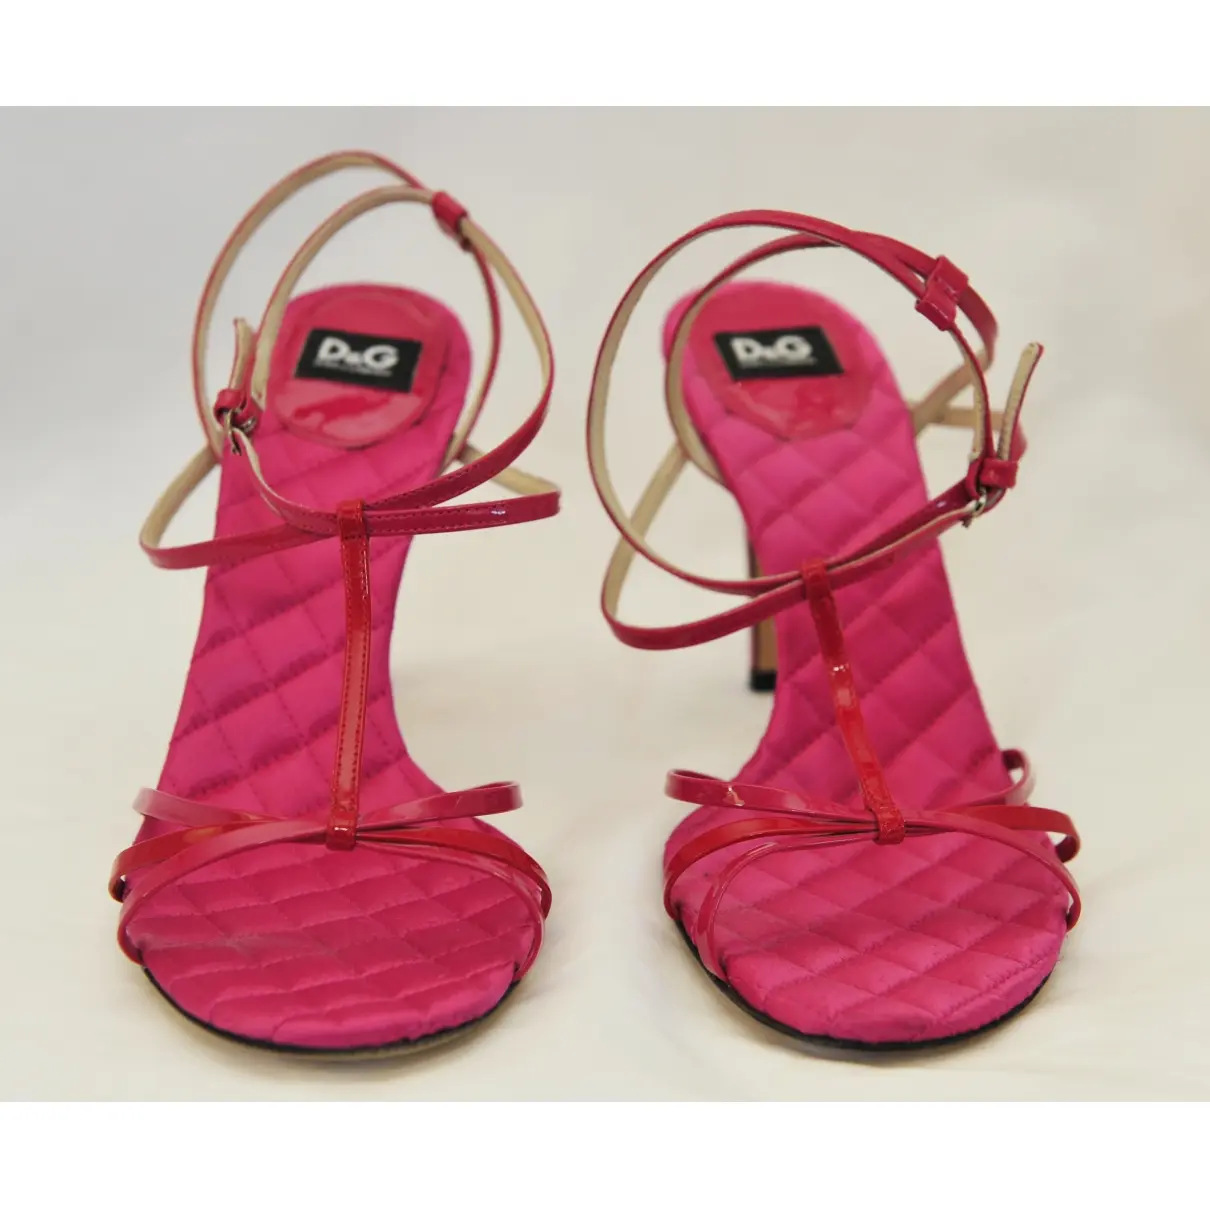 Buy D&G Patent leather sandal online